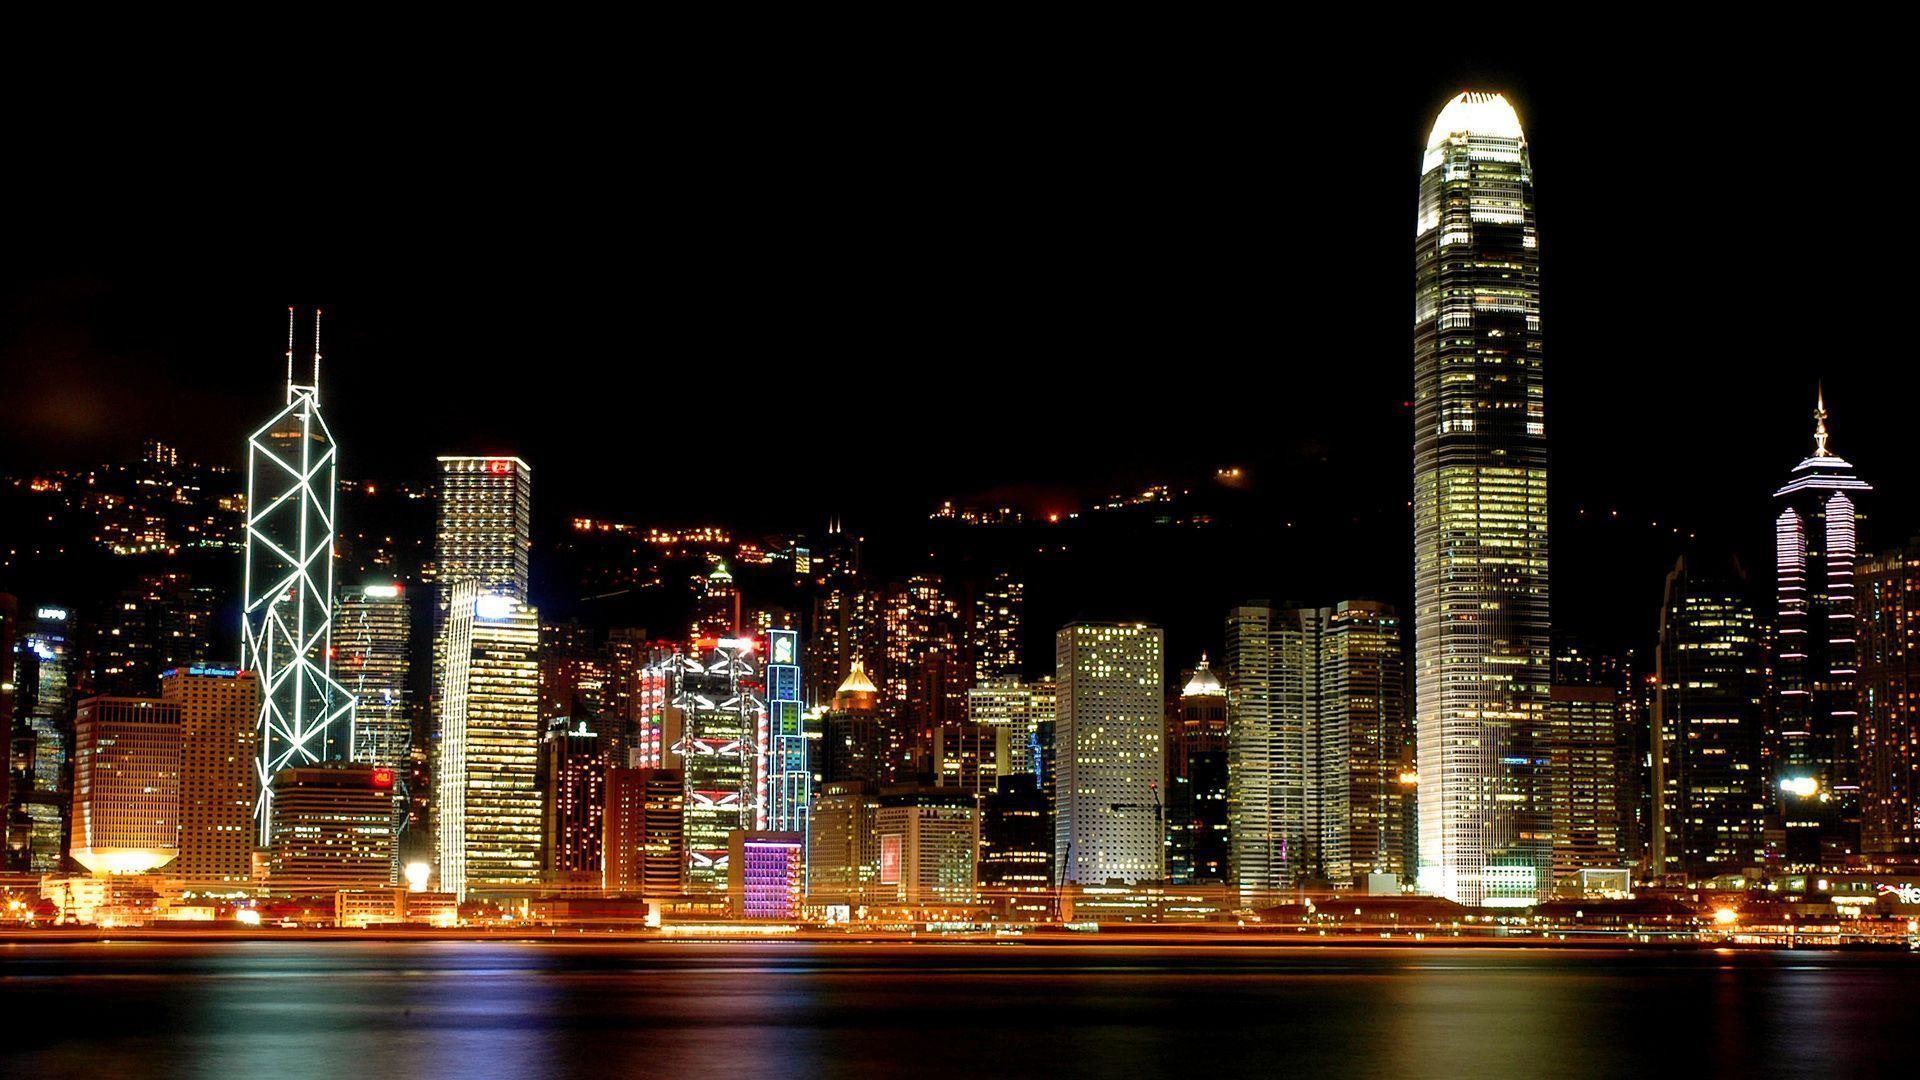 Free City HD Wallpaper Image For Desktop Download